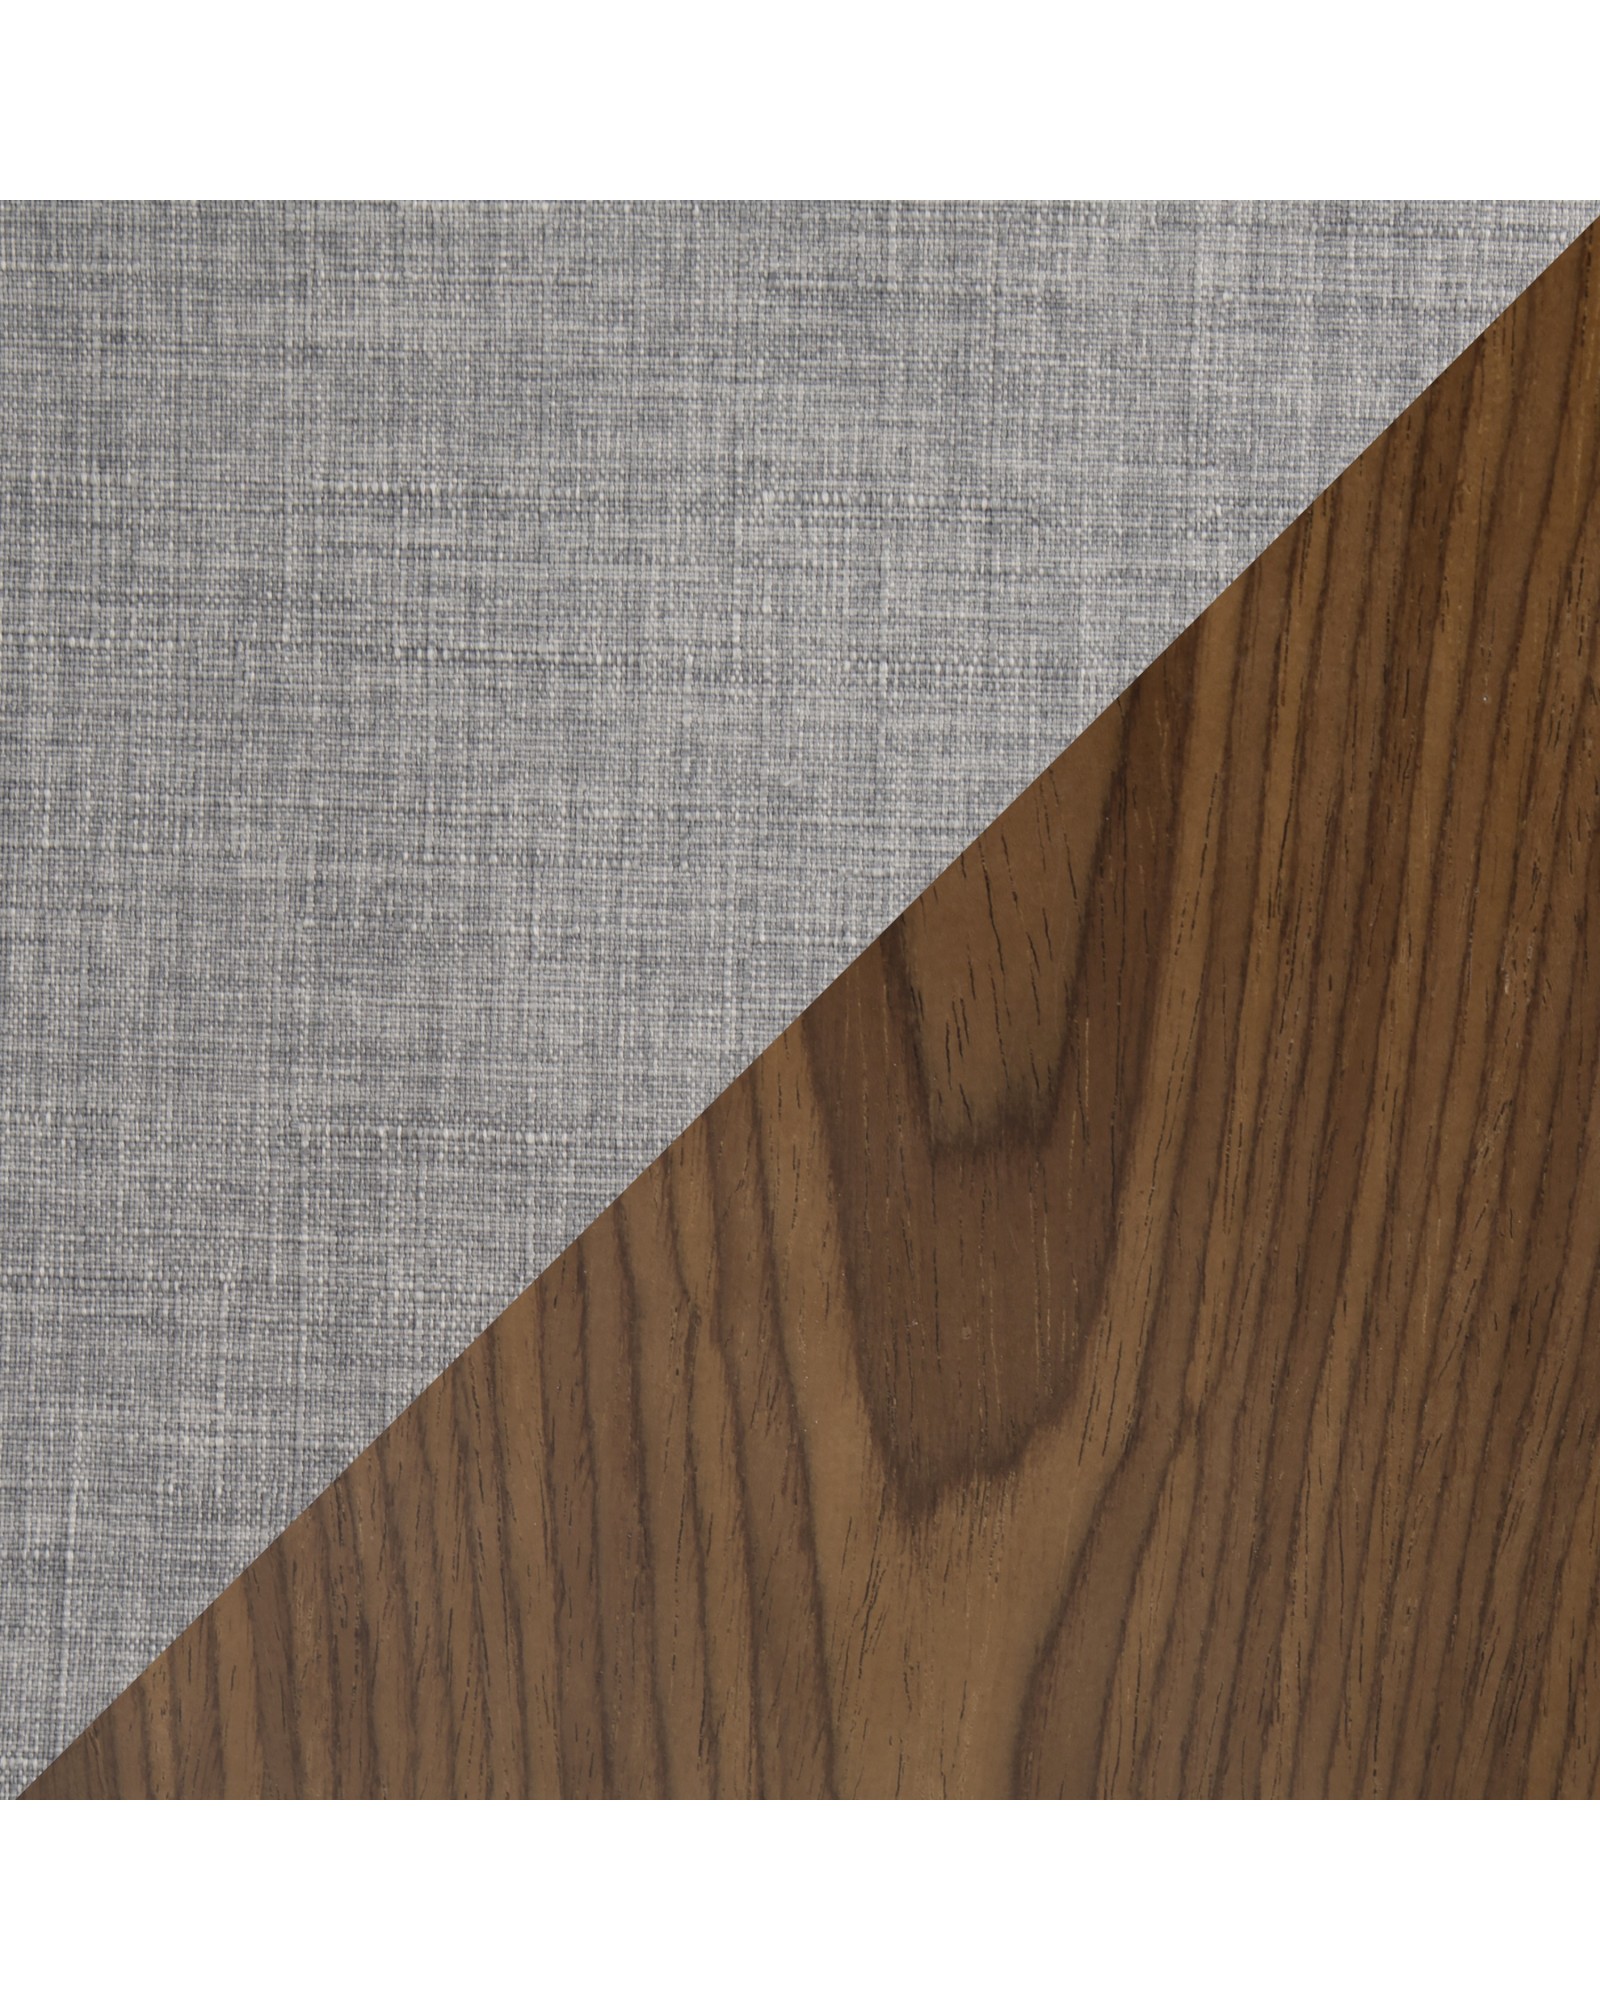 Curvini Mid-Century Modern Barstool in Walnut Wood and Grey Fabric